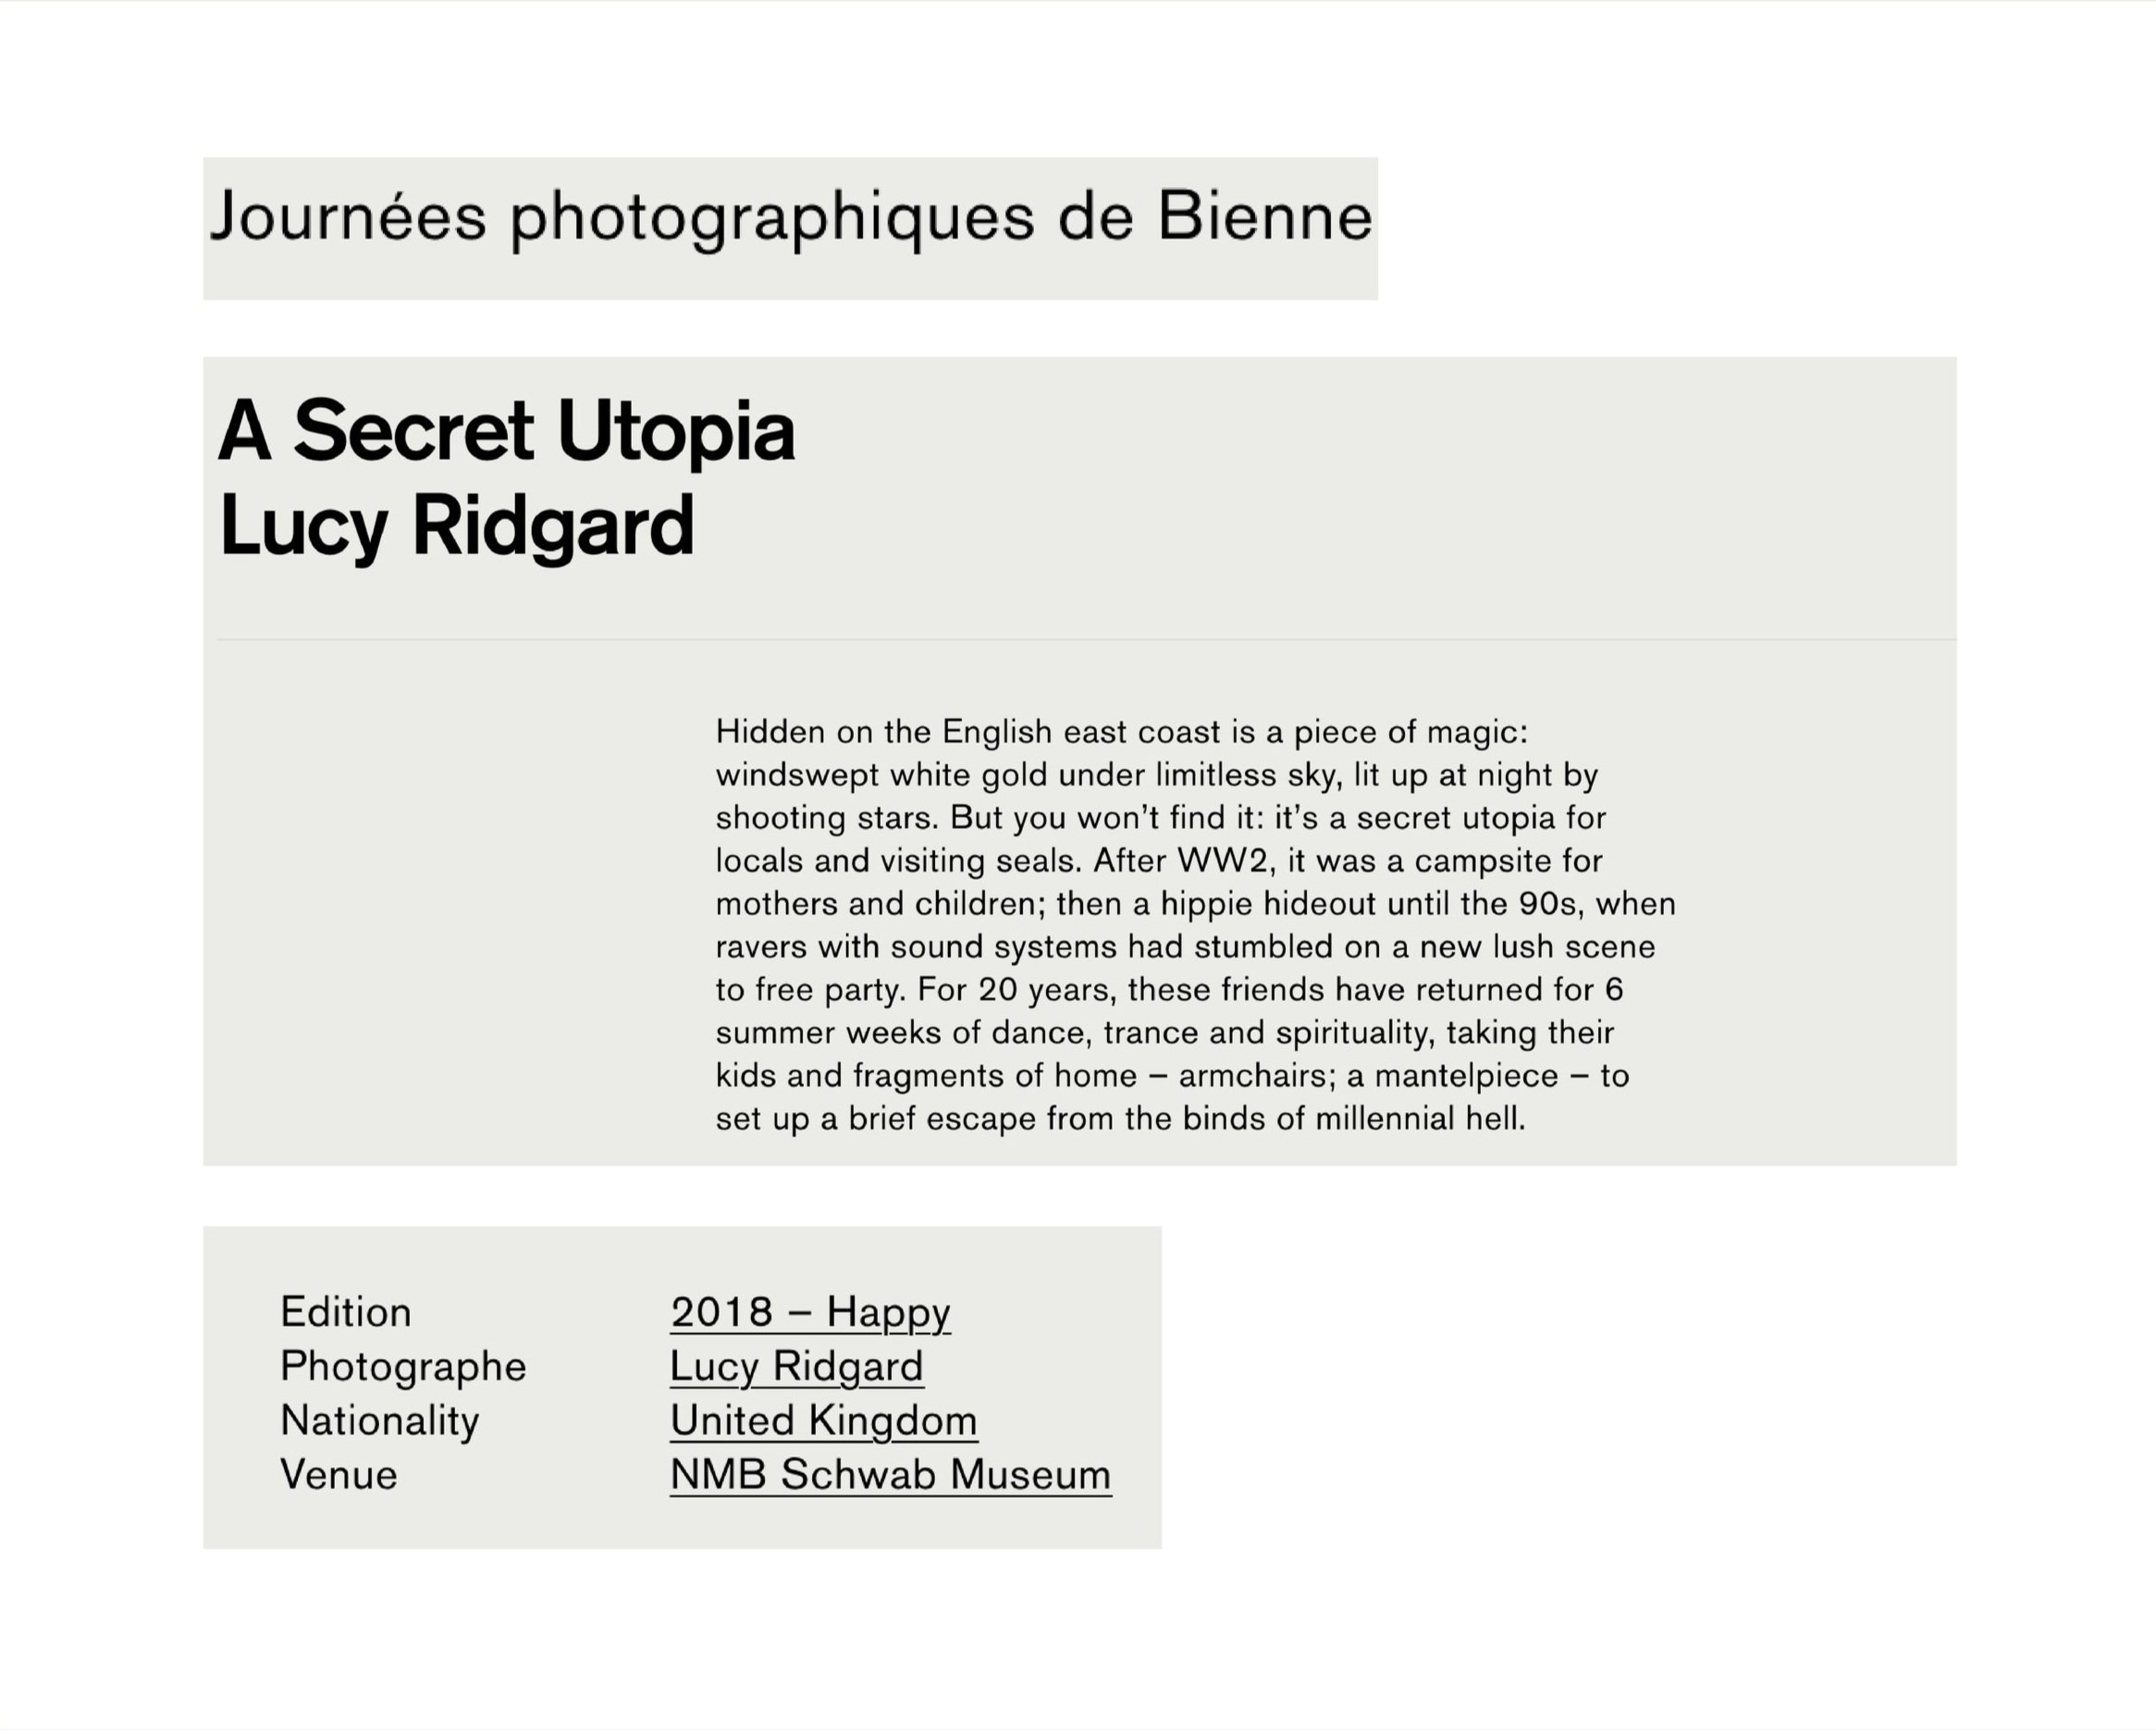 A+secret+Utopia+exhibition.jpg